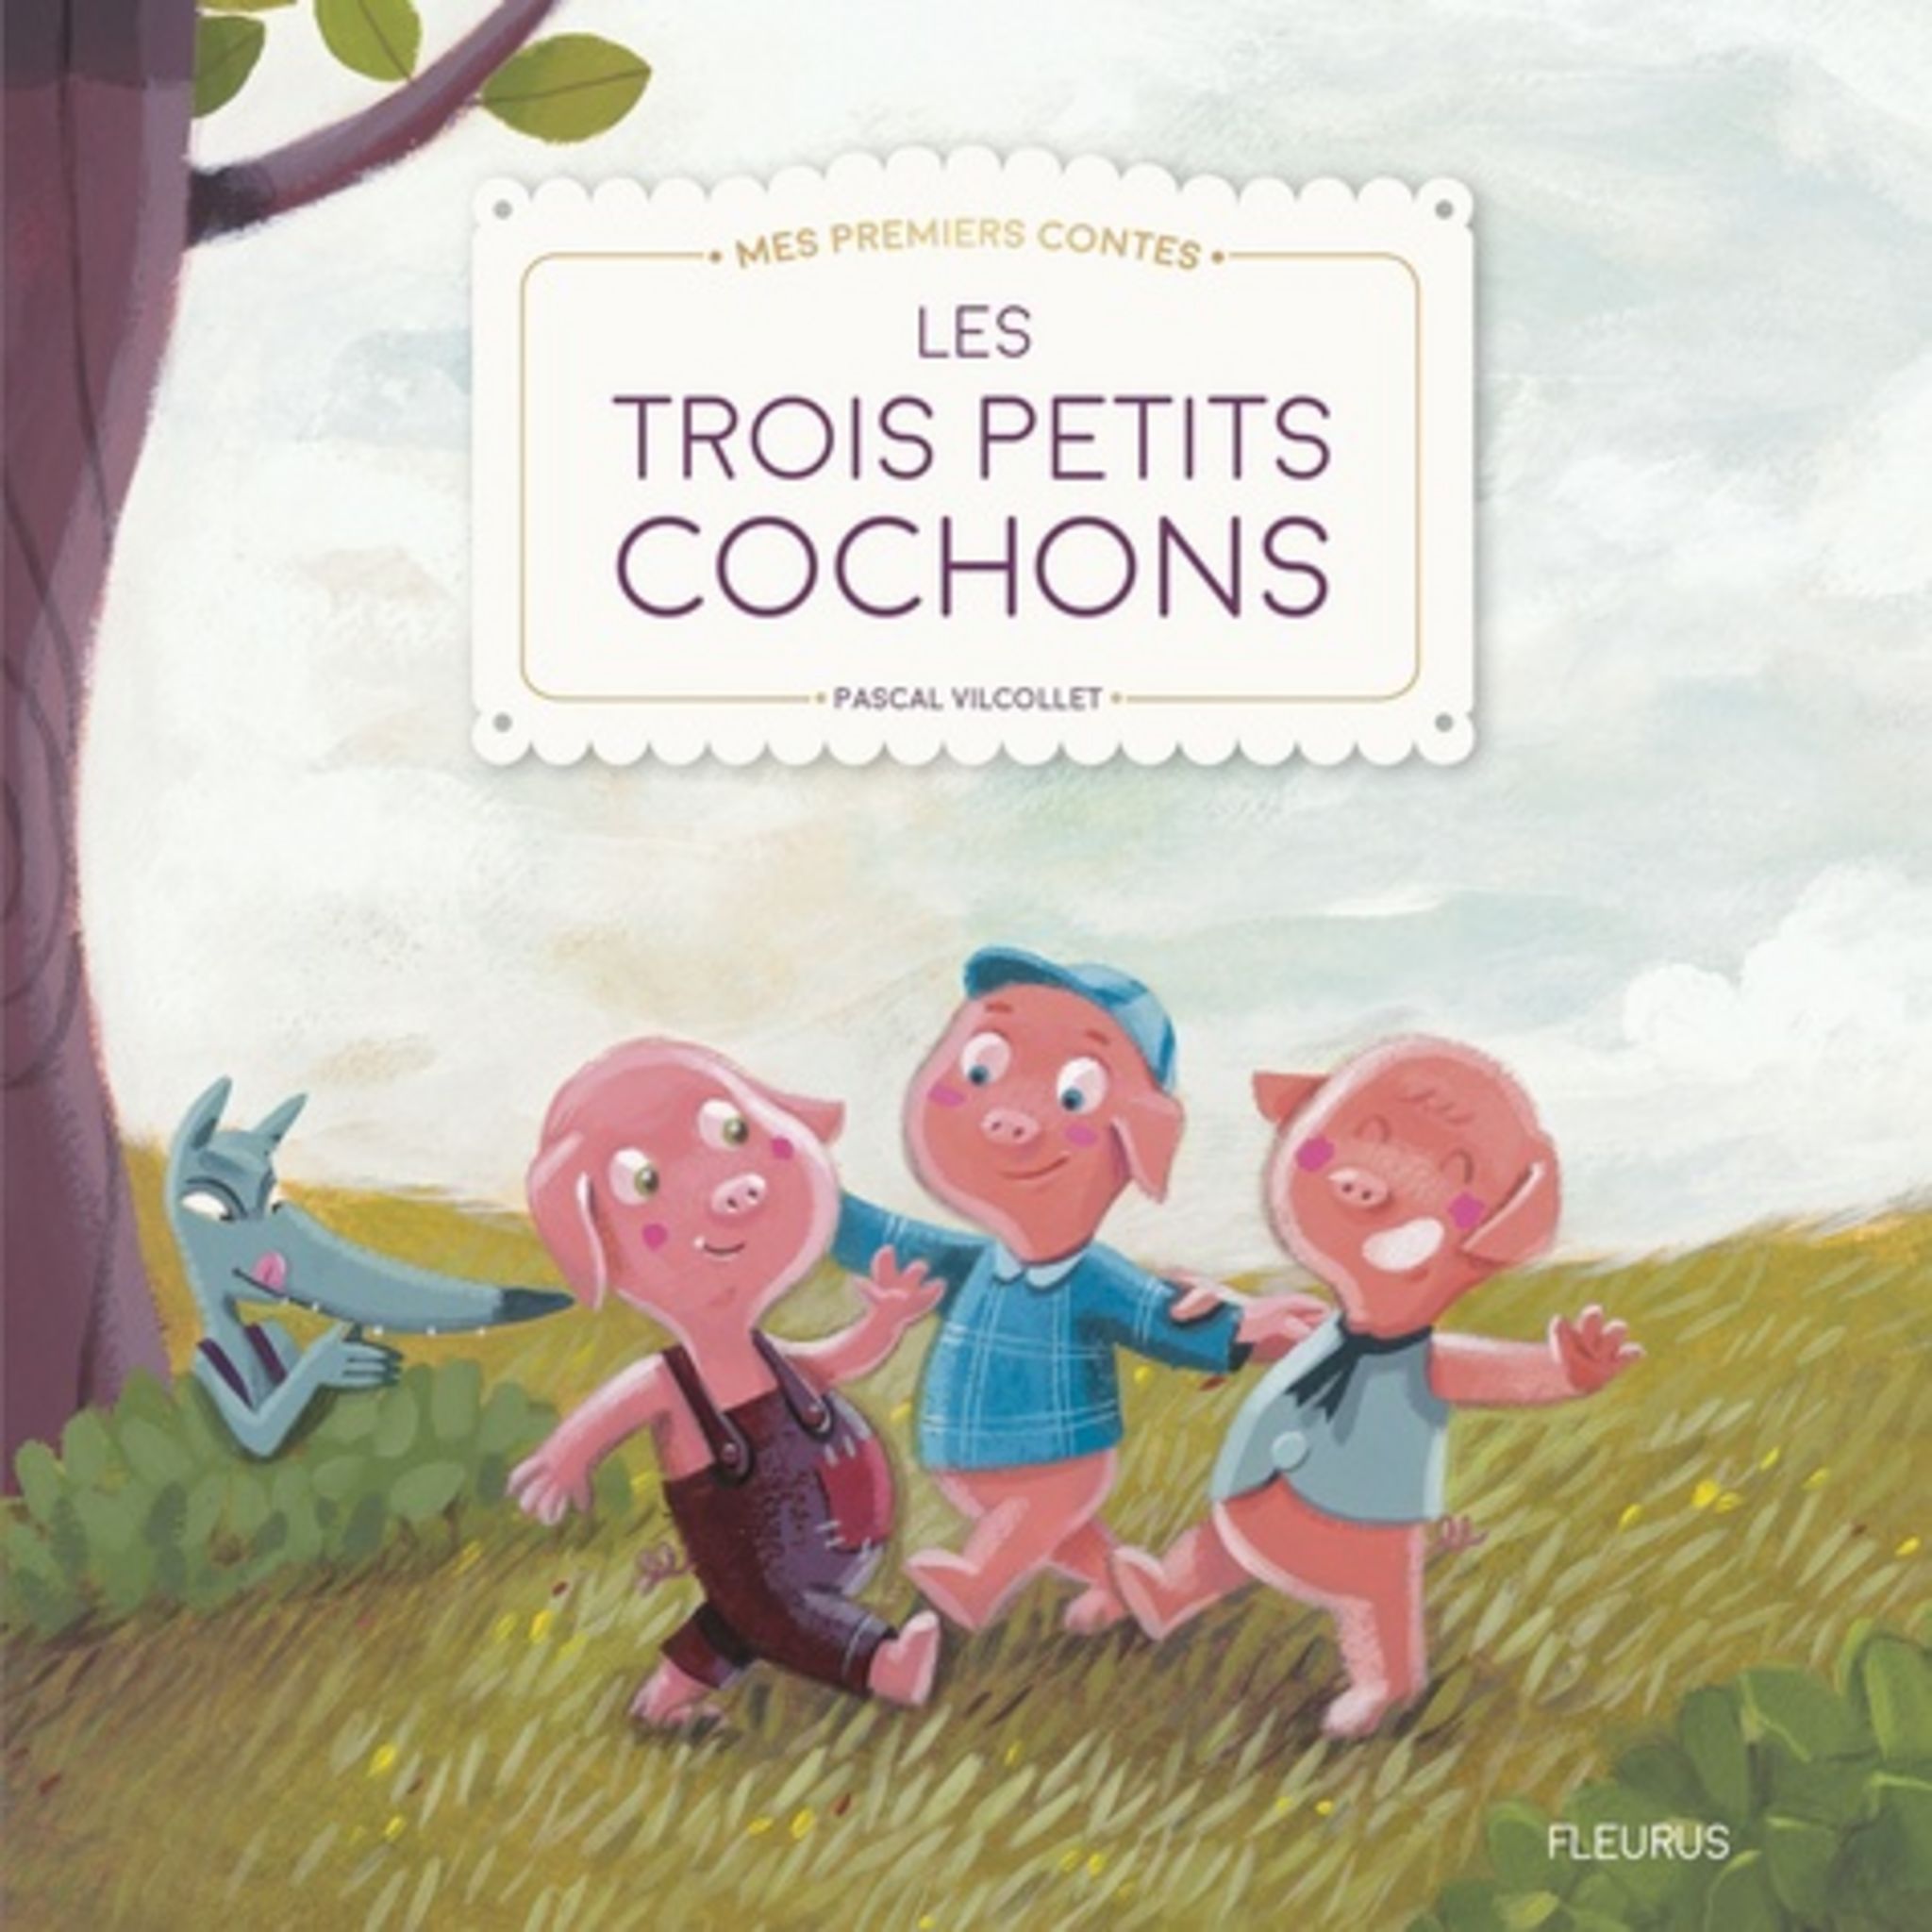 Les trois petits cochons by Olivier Tallec